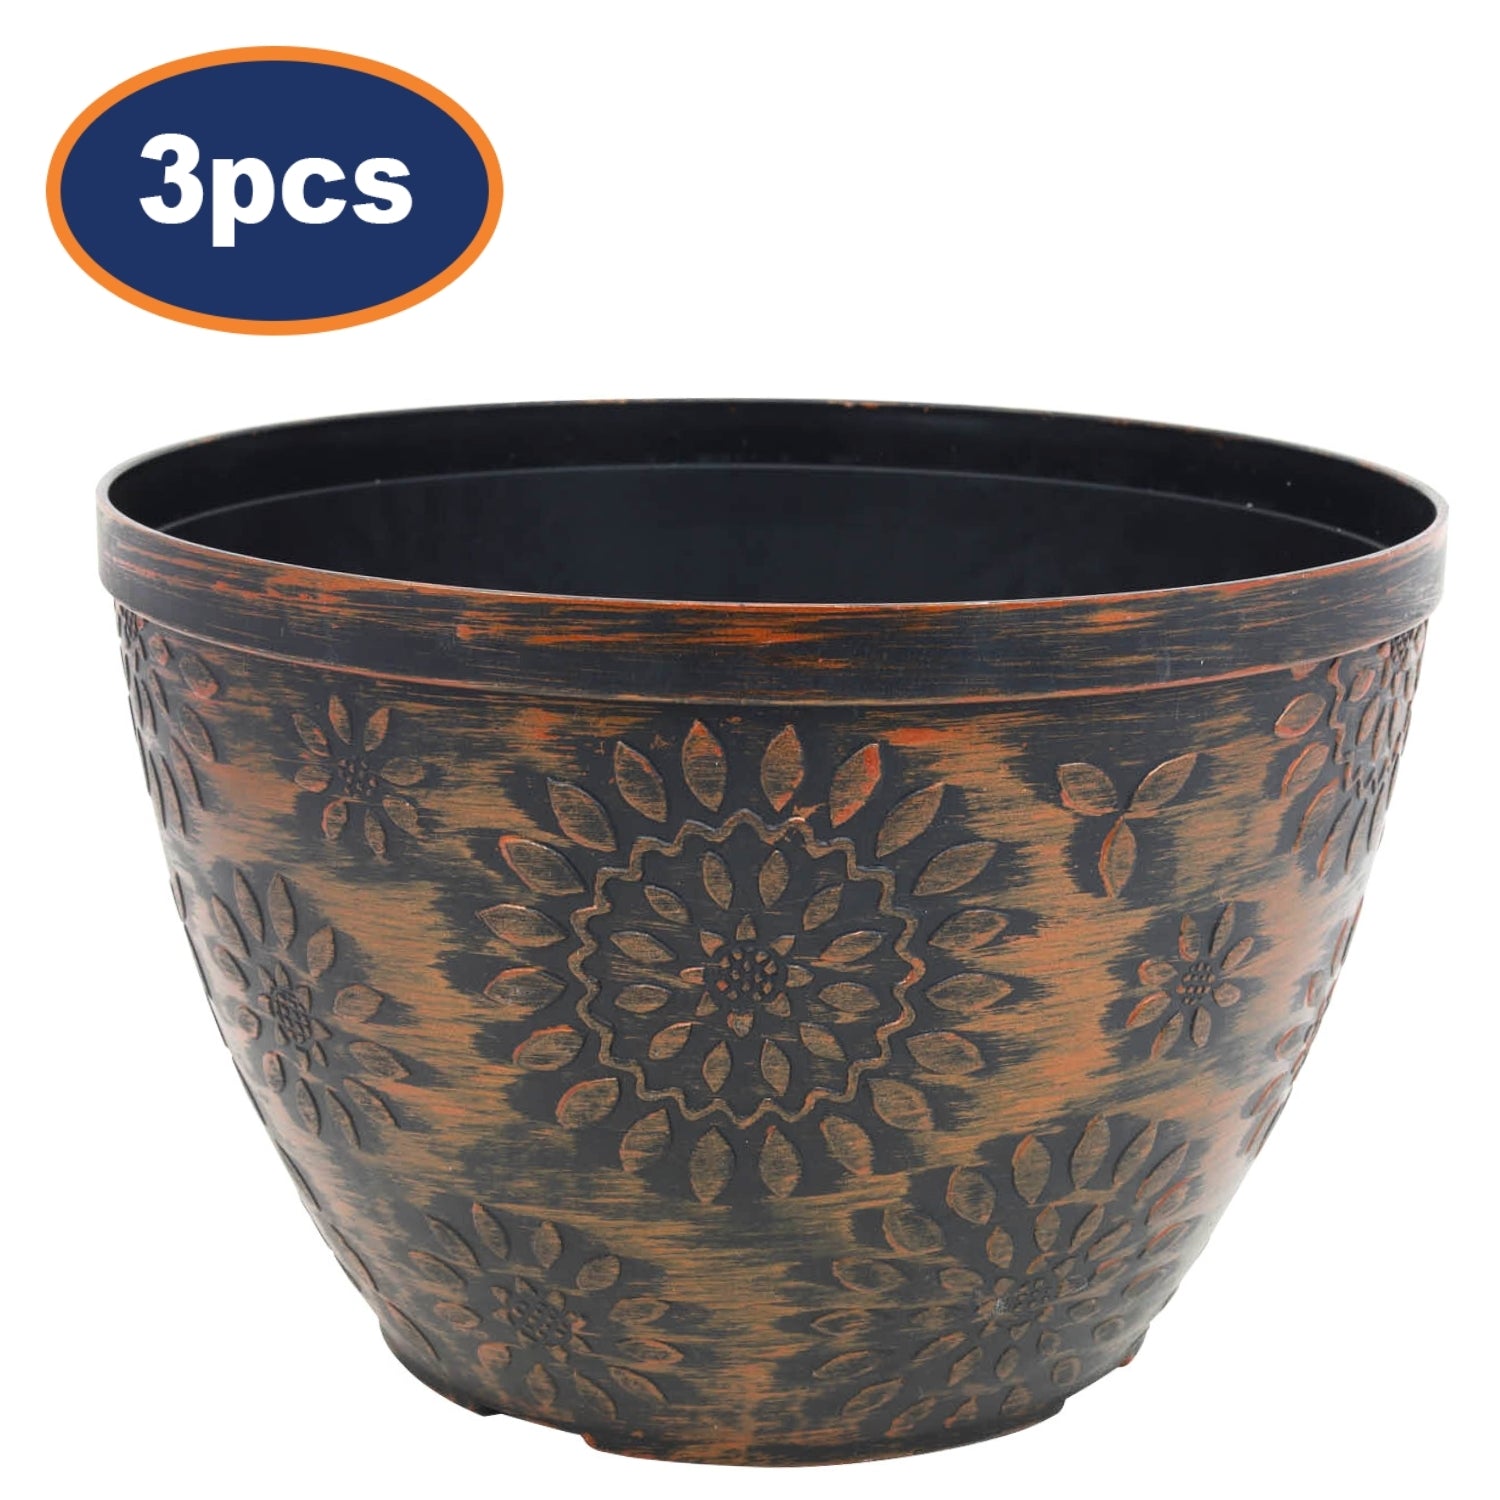 3Pcs 25cm Black Chengdu Pot Copper Brush Effect